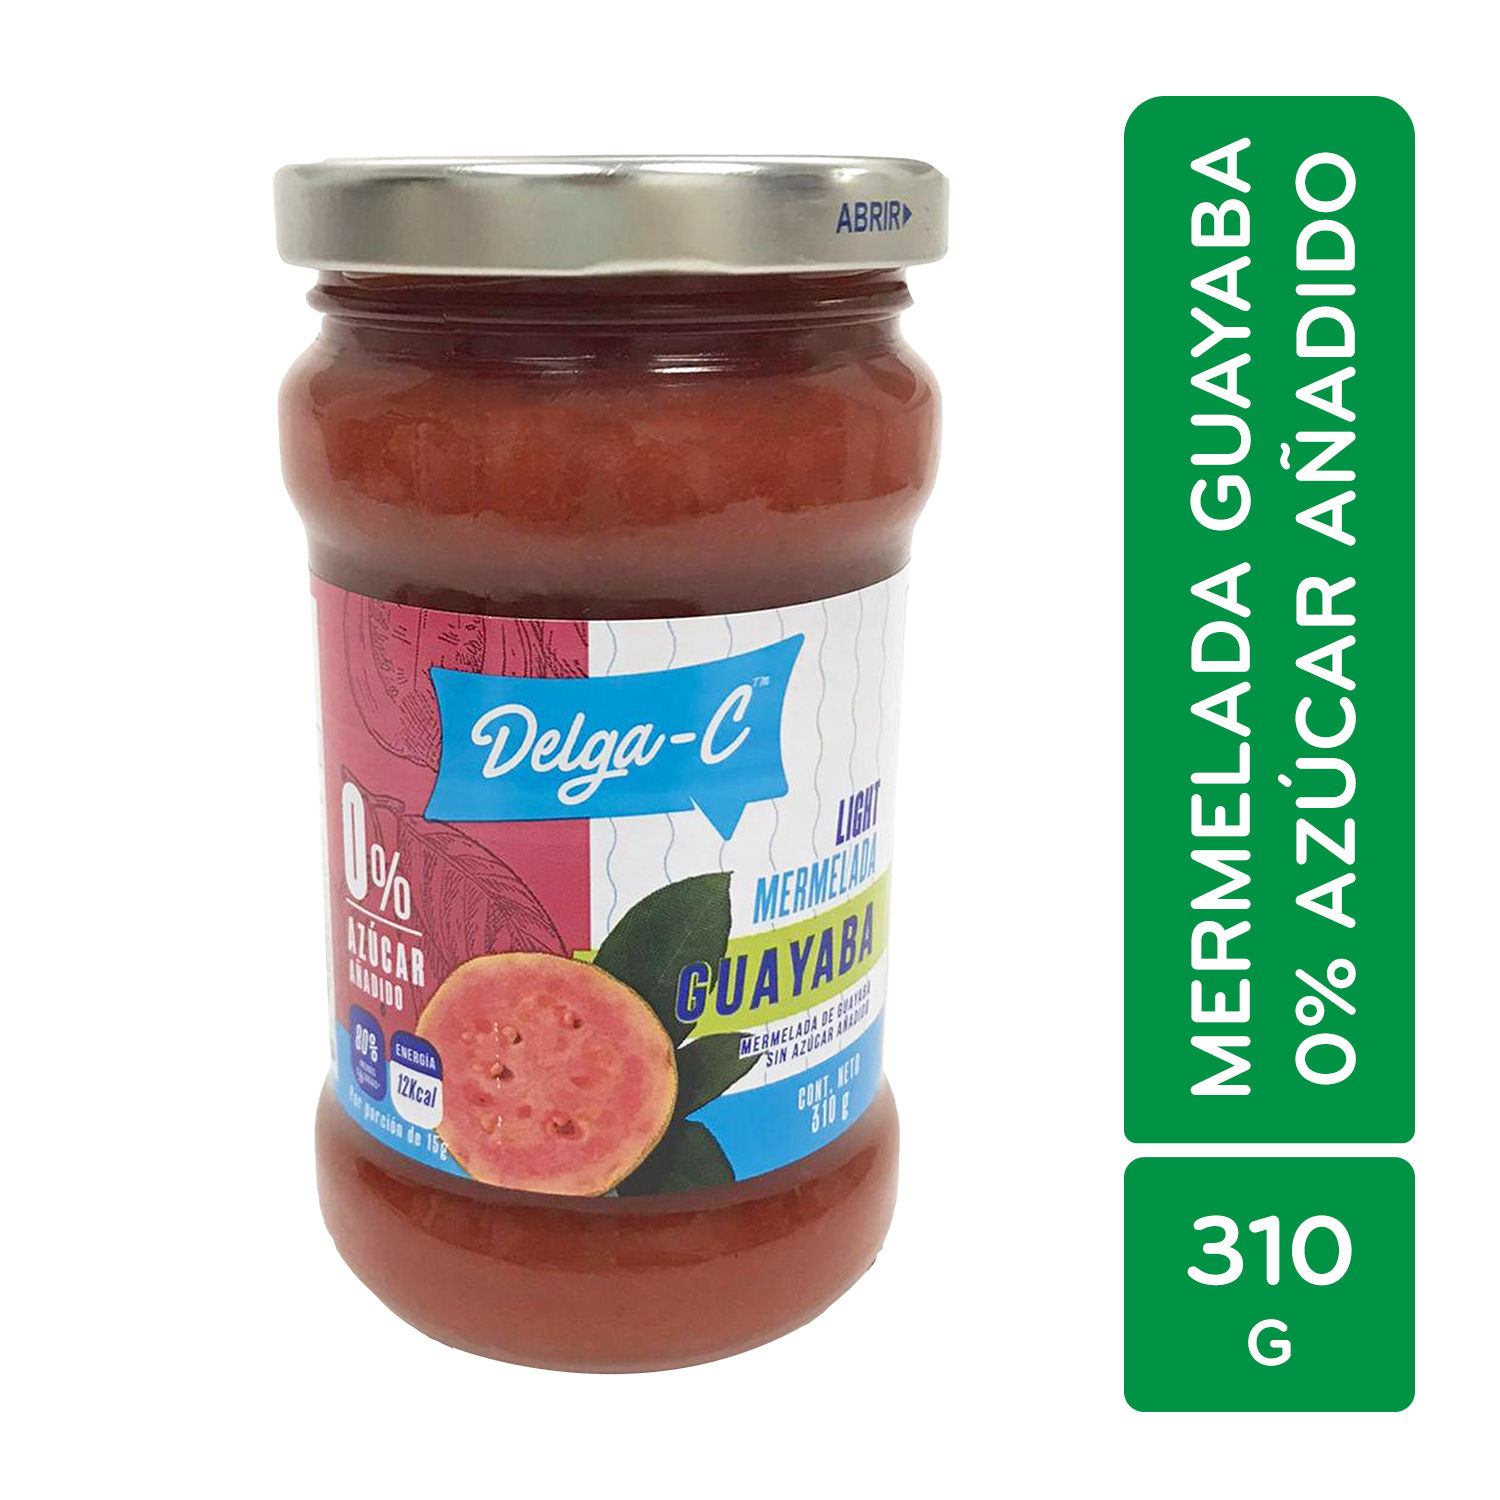 Mermelada Guayaba Delga-c Frasco 310 G